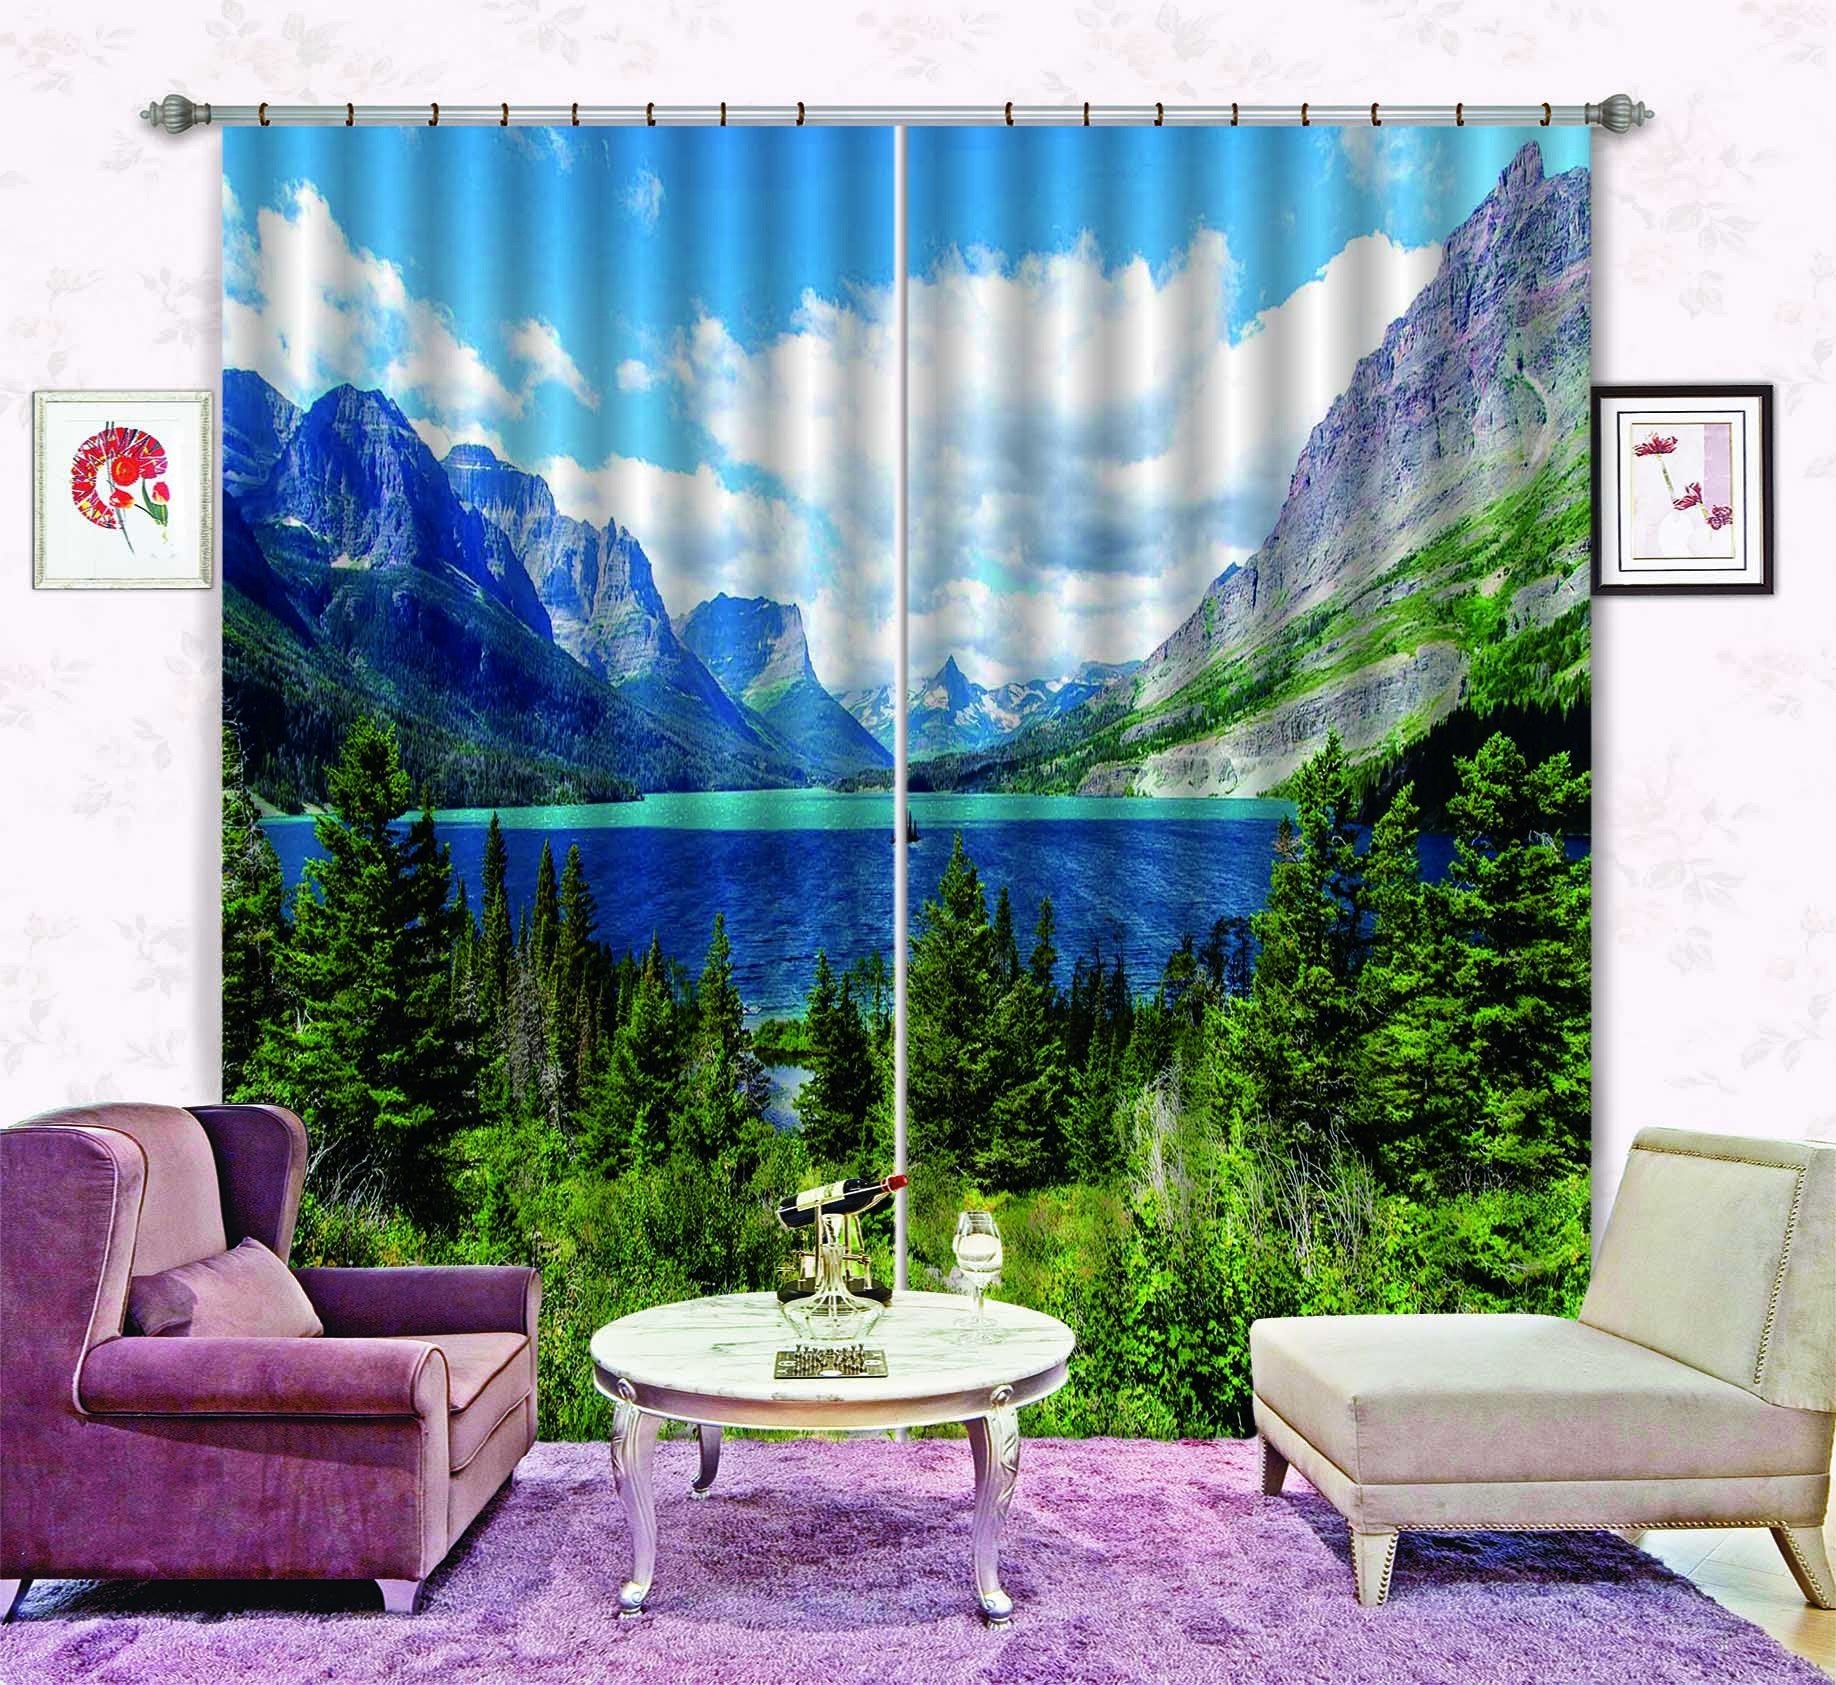 3D Lake Scenery 624 Curtains Drapes Wallpaper AJ Wallpaper 